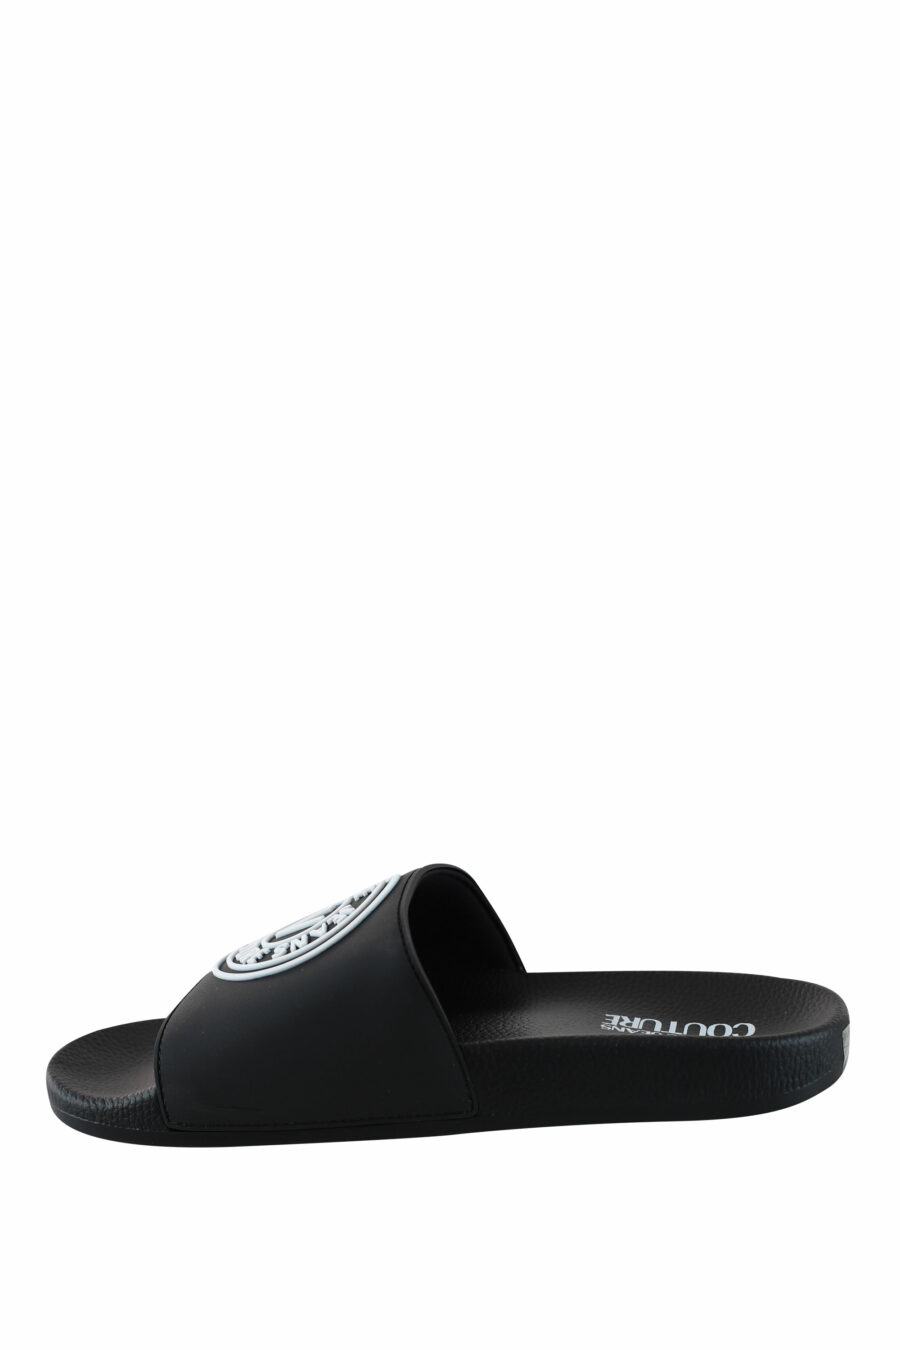 Schwarze Flip Flops mit schwarzem kreisförmigen Maxilogo - IMG 4429